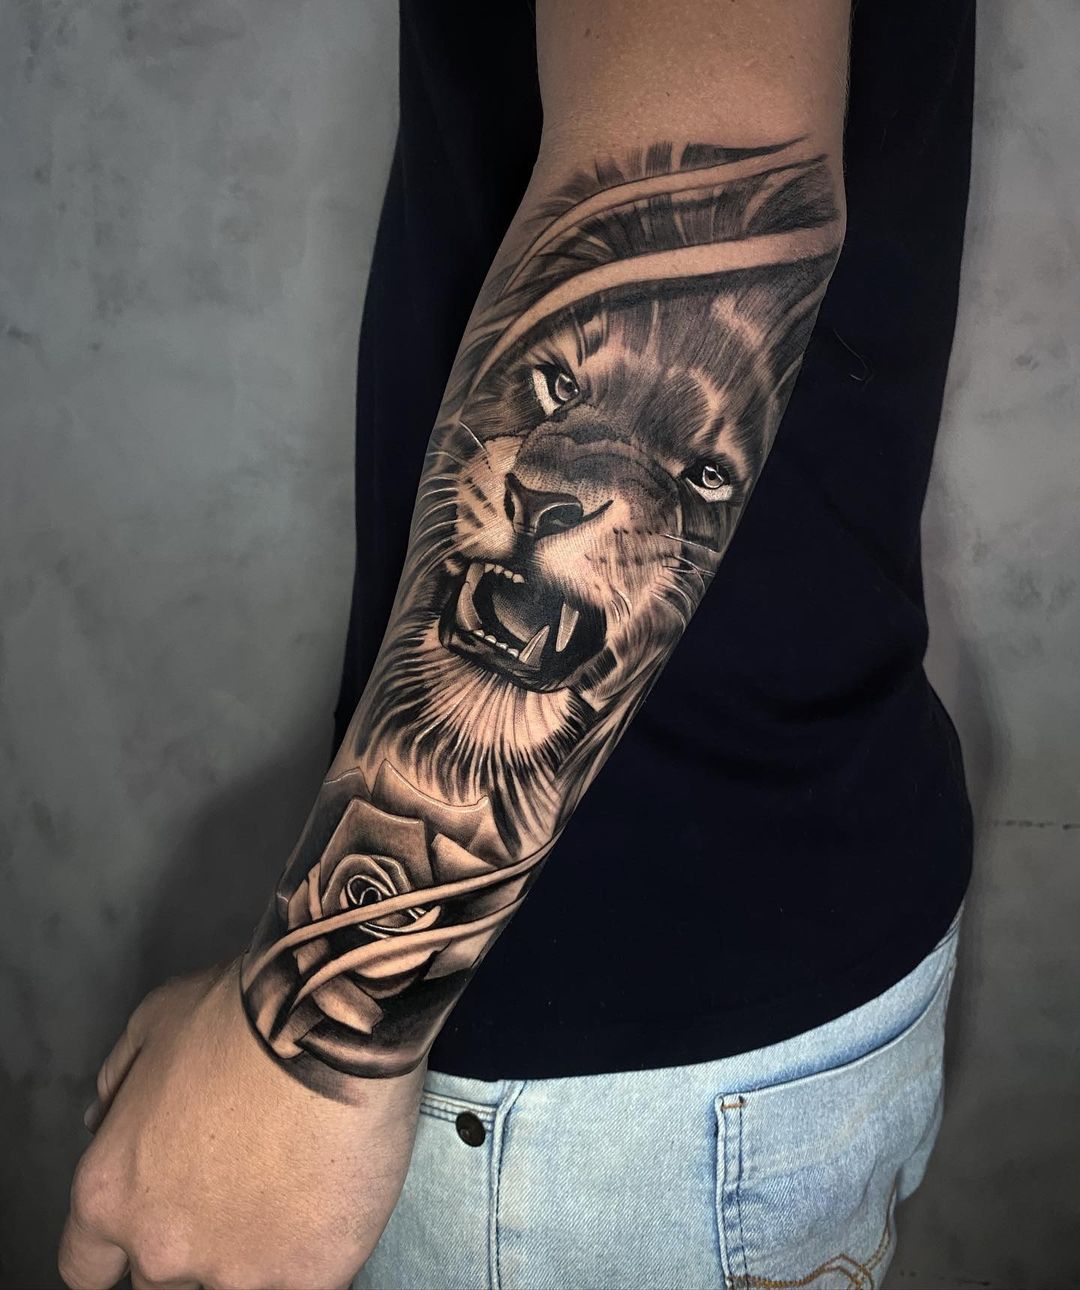 Carloz Tattoos Carl Heggarty on Twitter Lion tattoo from today on inner  forearm Like Retweet Comment  tattoo tattoos tattooartist  blackandgrey realism lion lions roar willyg httpstcoOB9gw0gpL3   Twitter